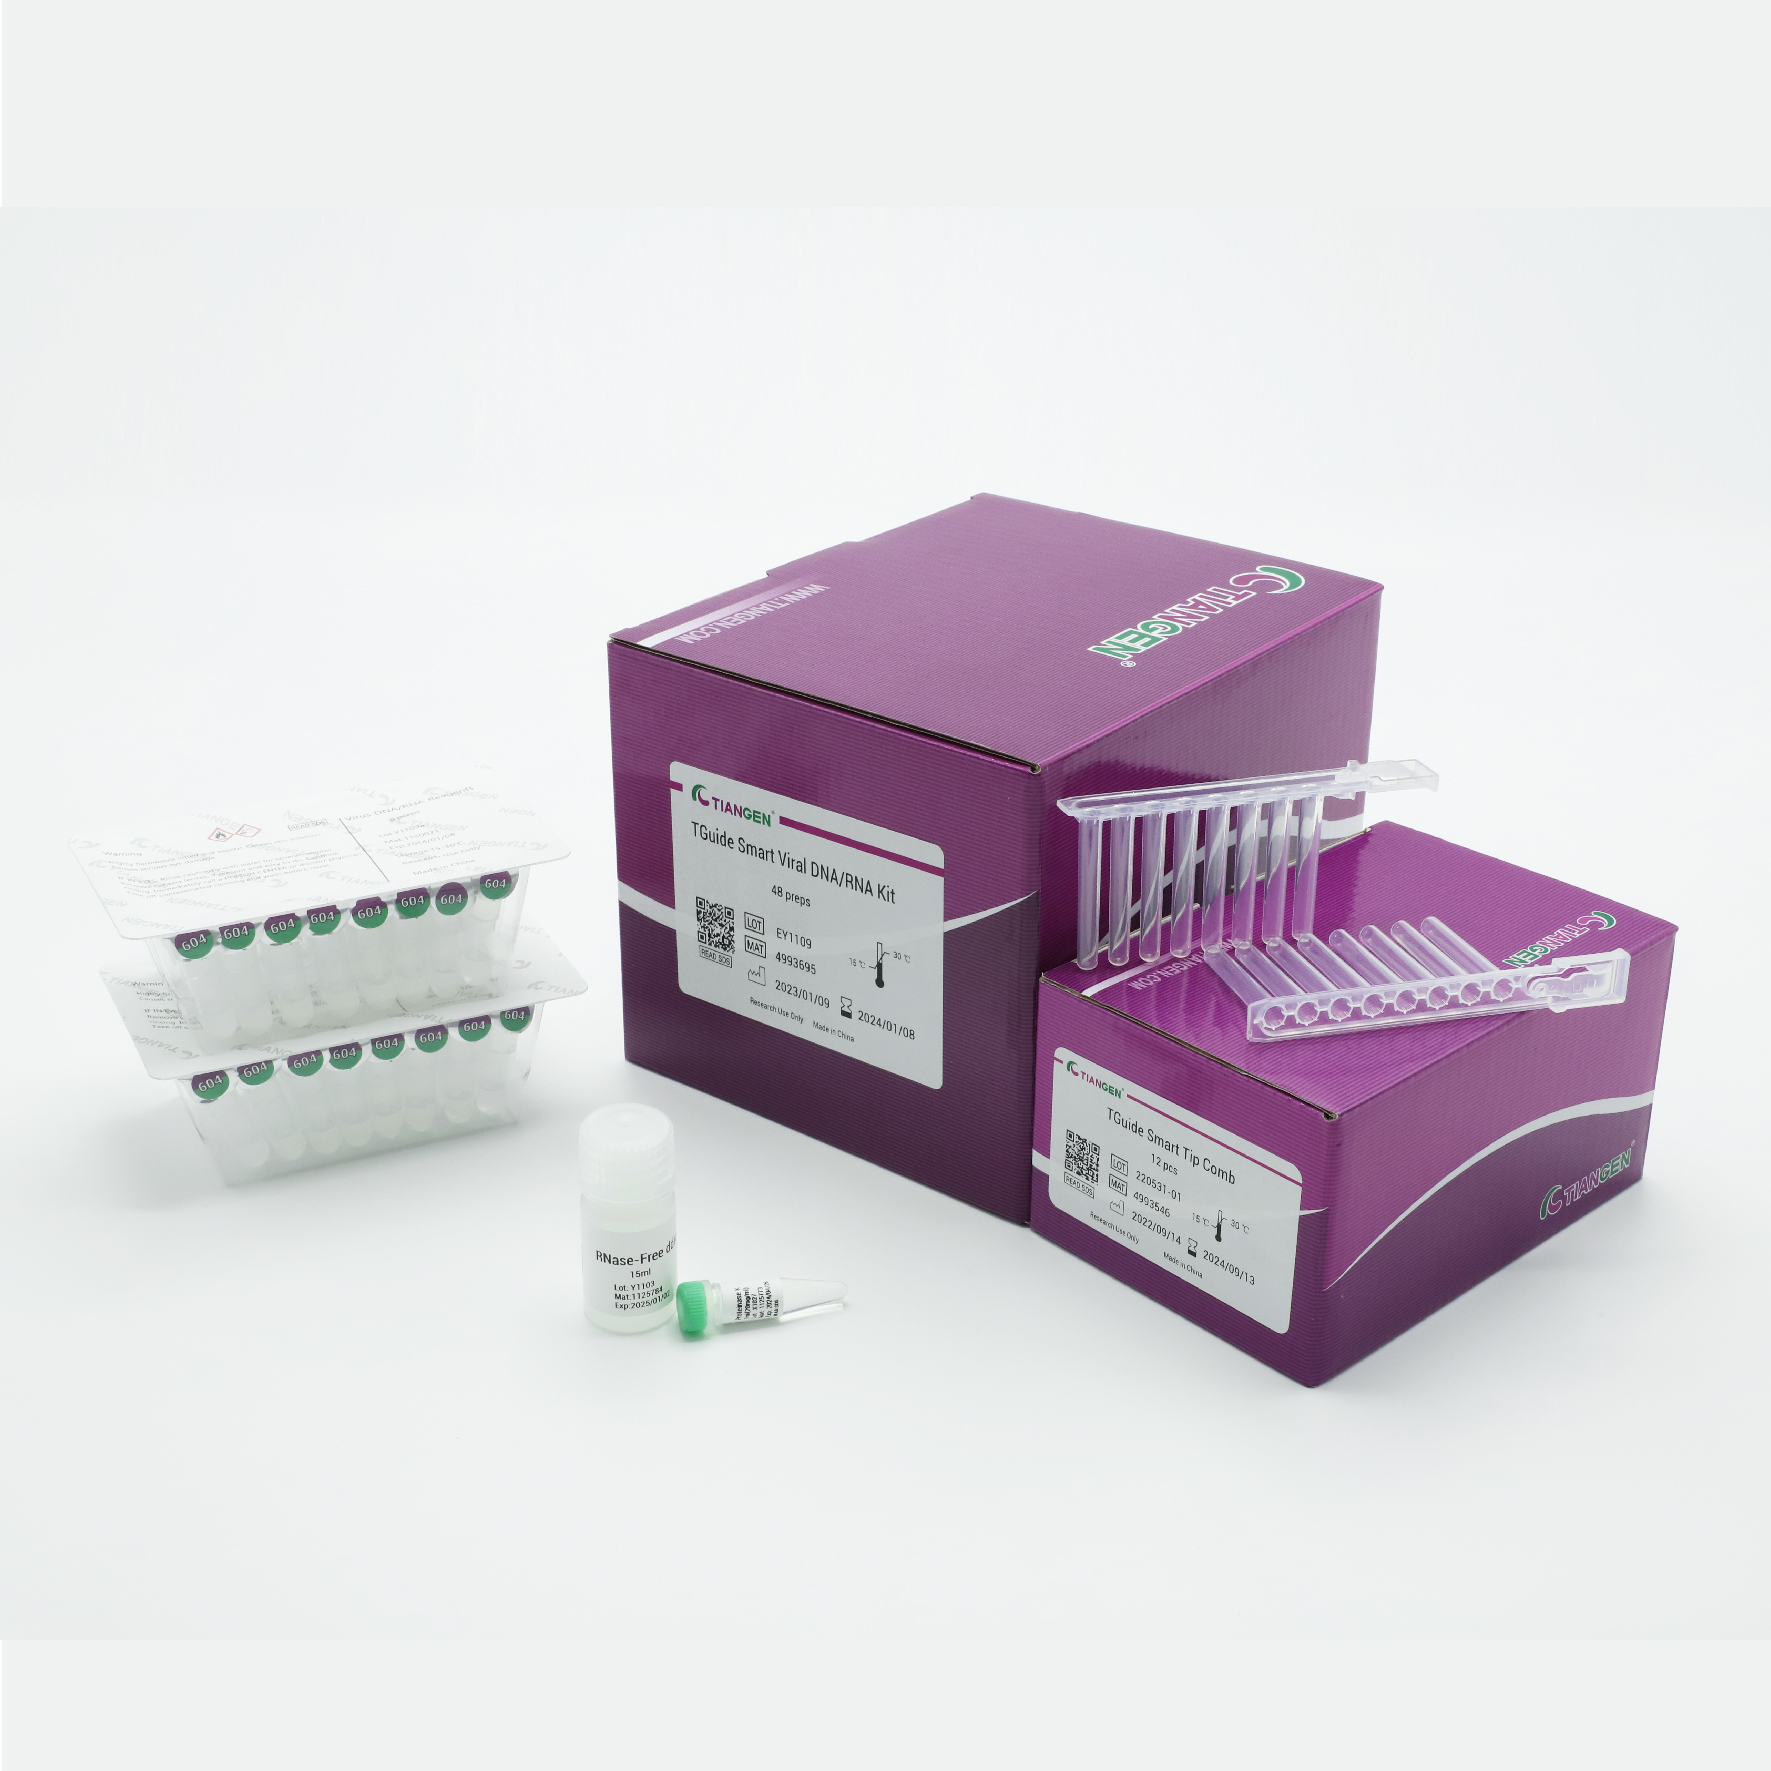 TGuide Smart Viral DNA/RNA Kit Featured Image